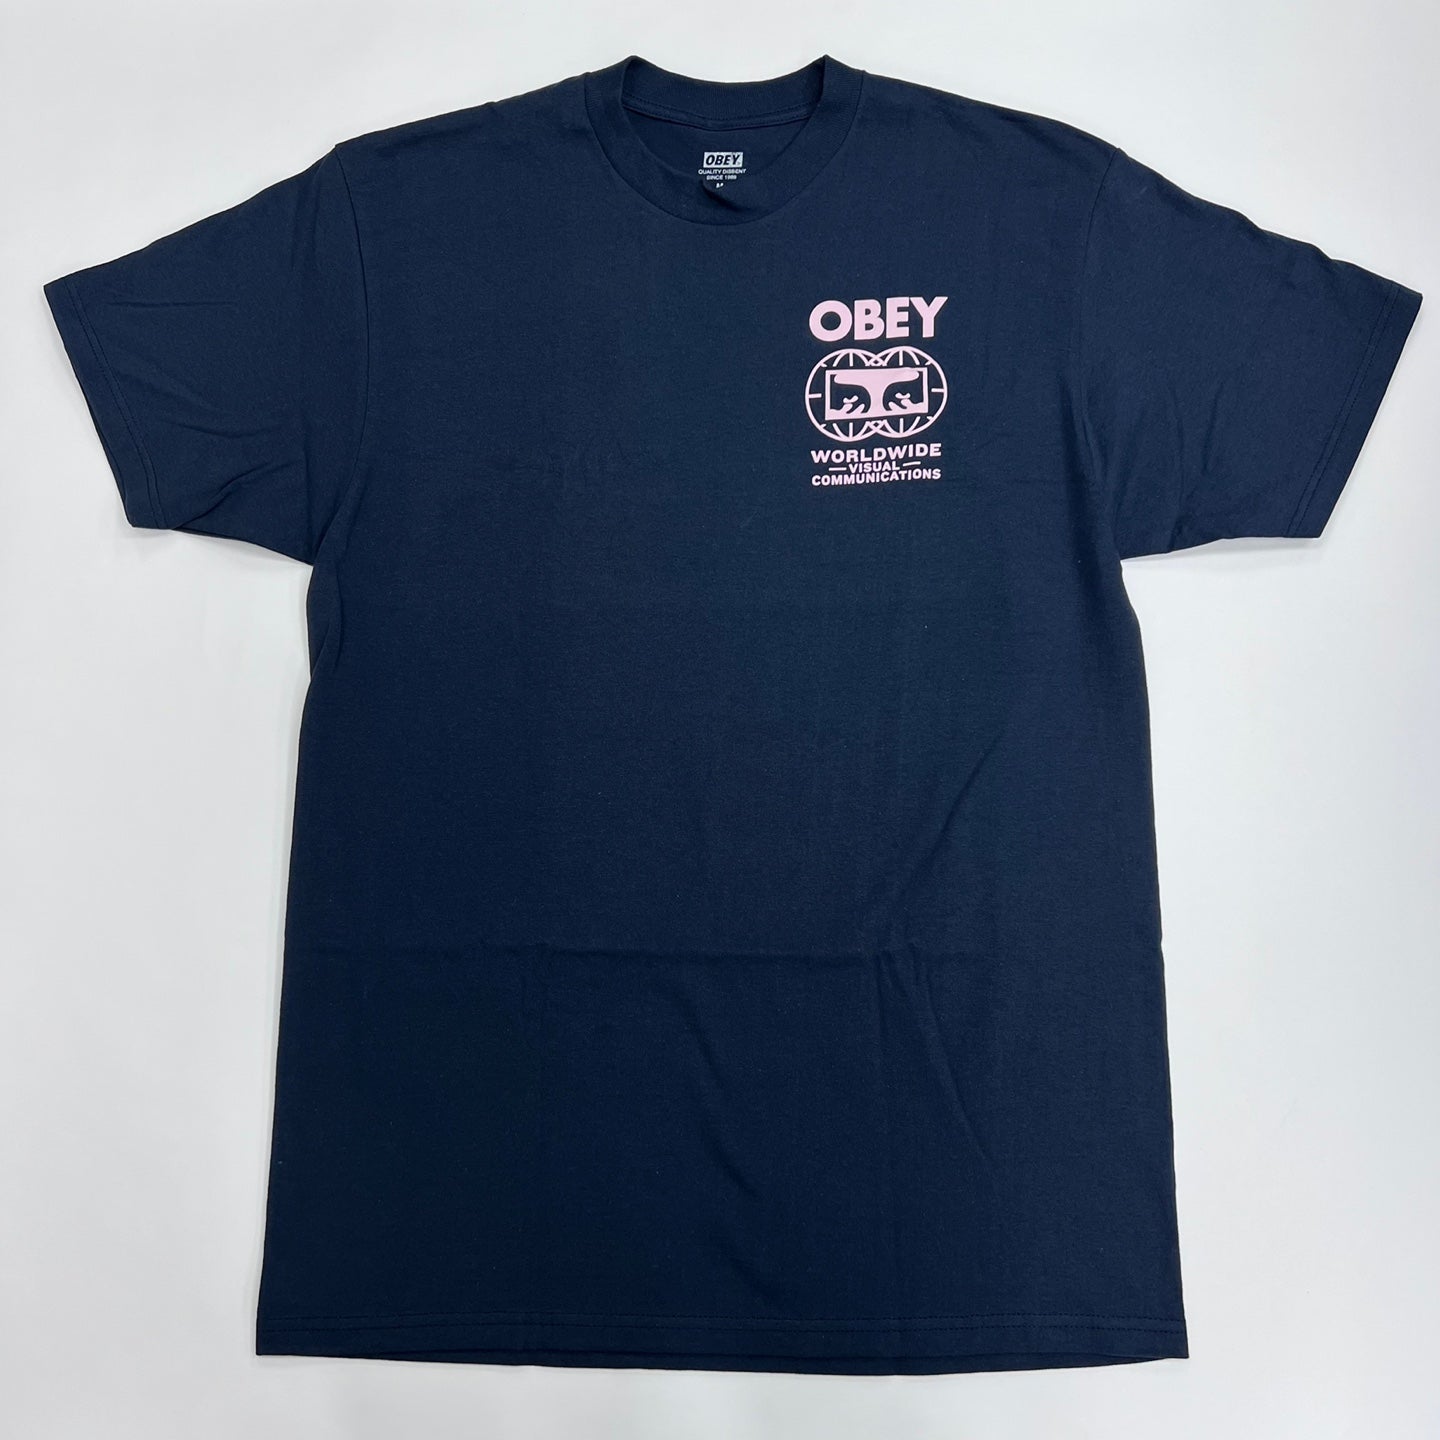 OBEY Worldwide Visual Communications T-Shirt - Navy